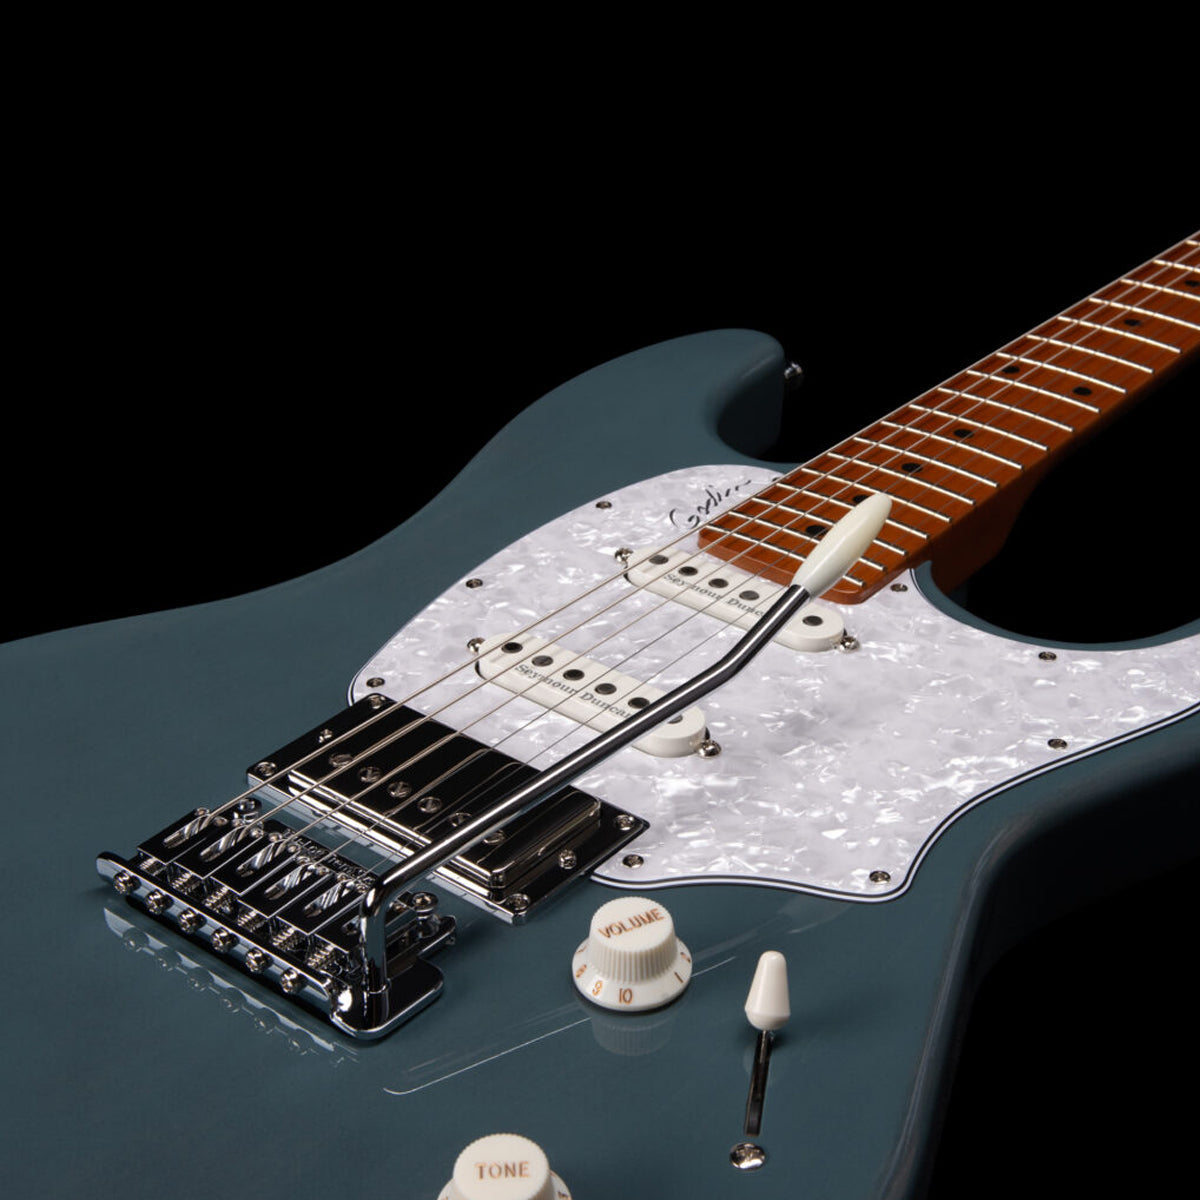 Godin Session T-Pro Electric Guitar ~ Arctik Blue MN, Electric Guitar for sale at Richards Guitars.